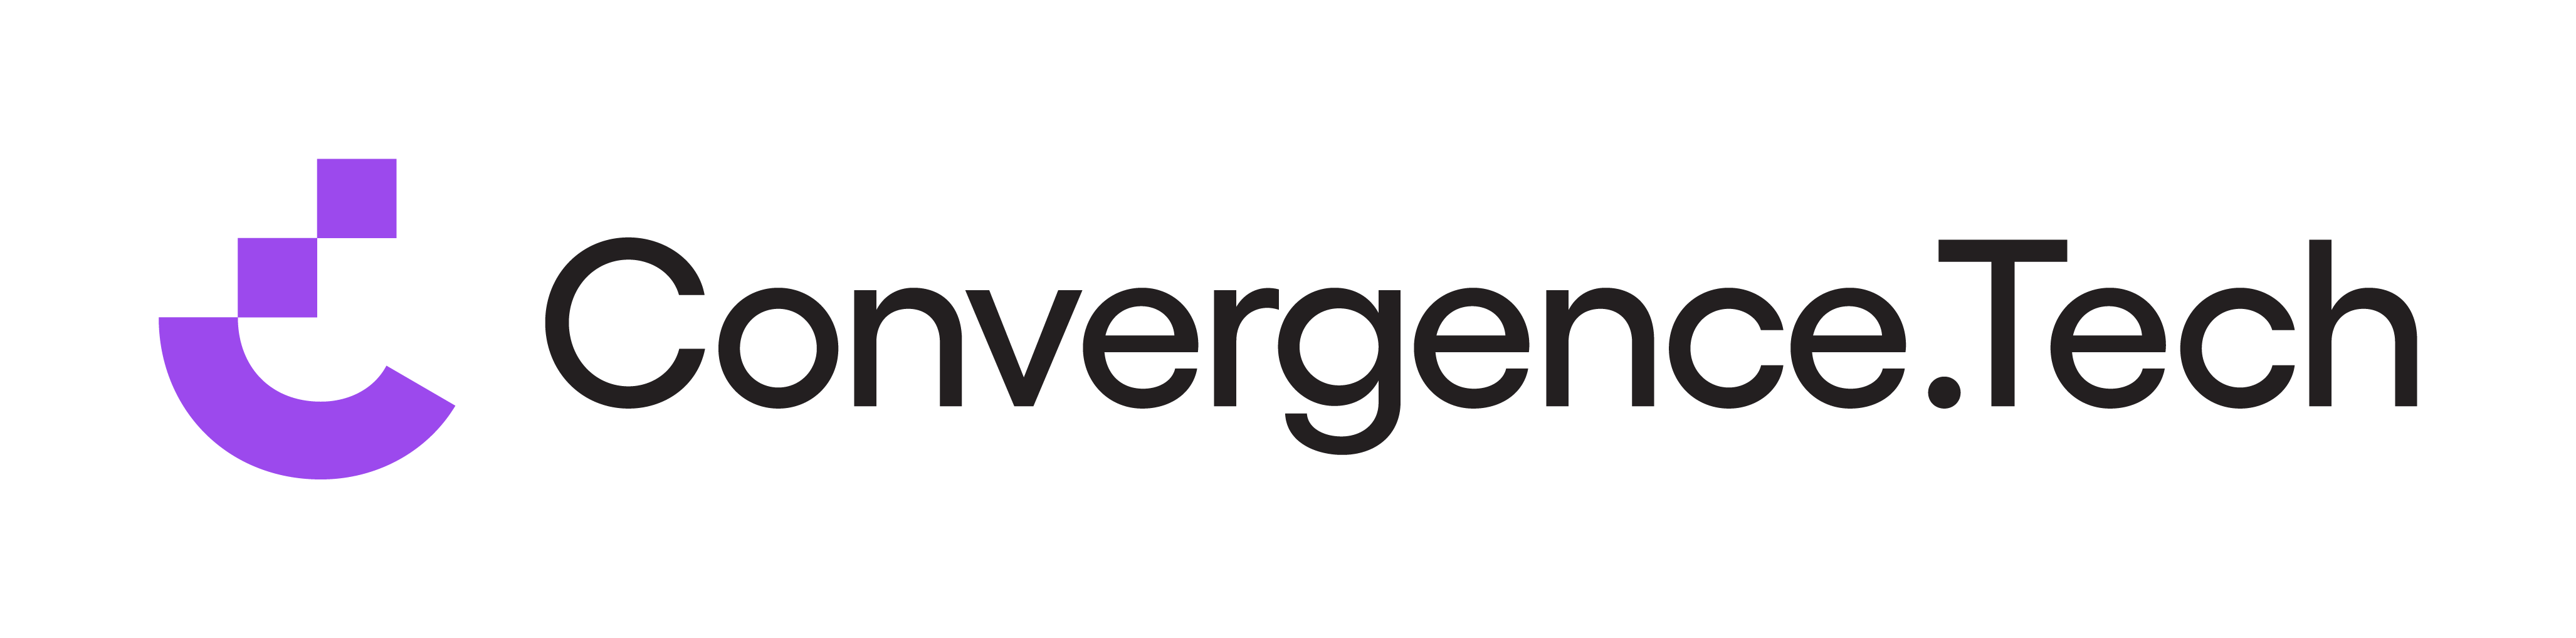 convergence tech logo